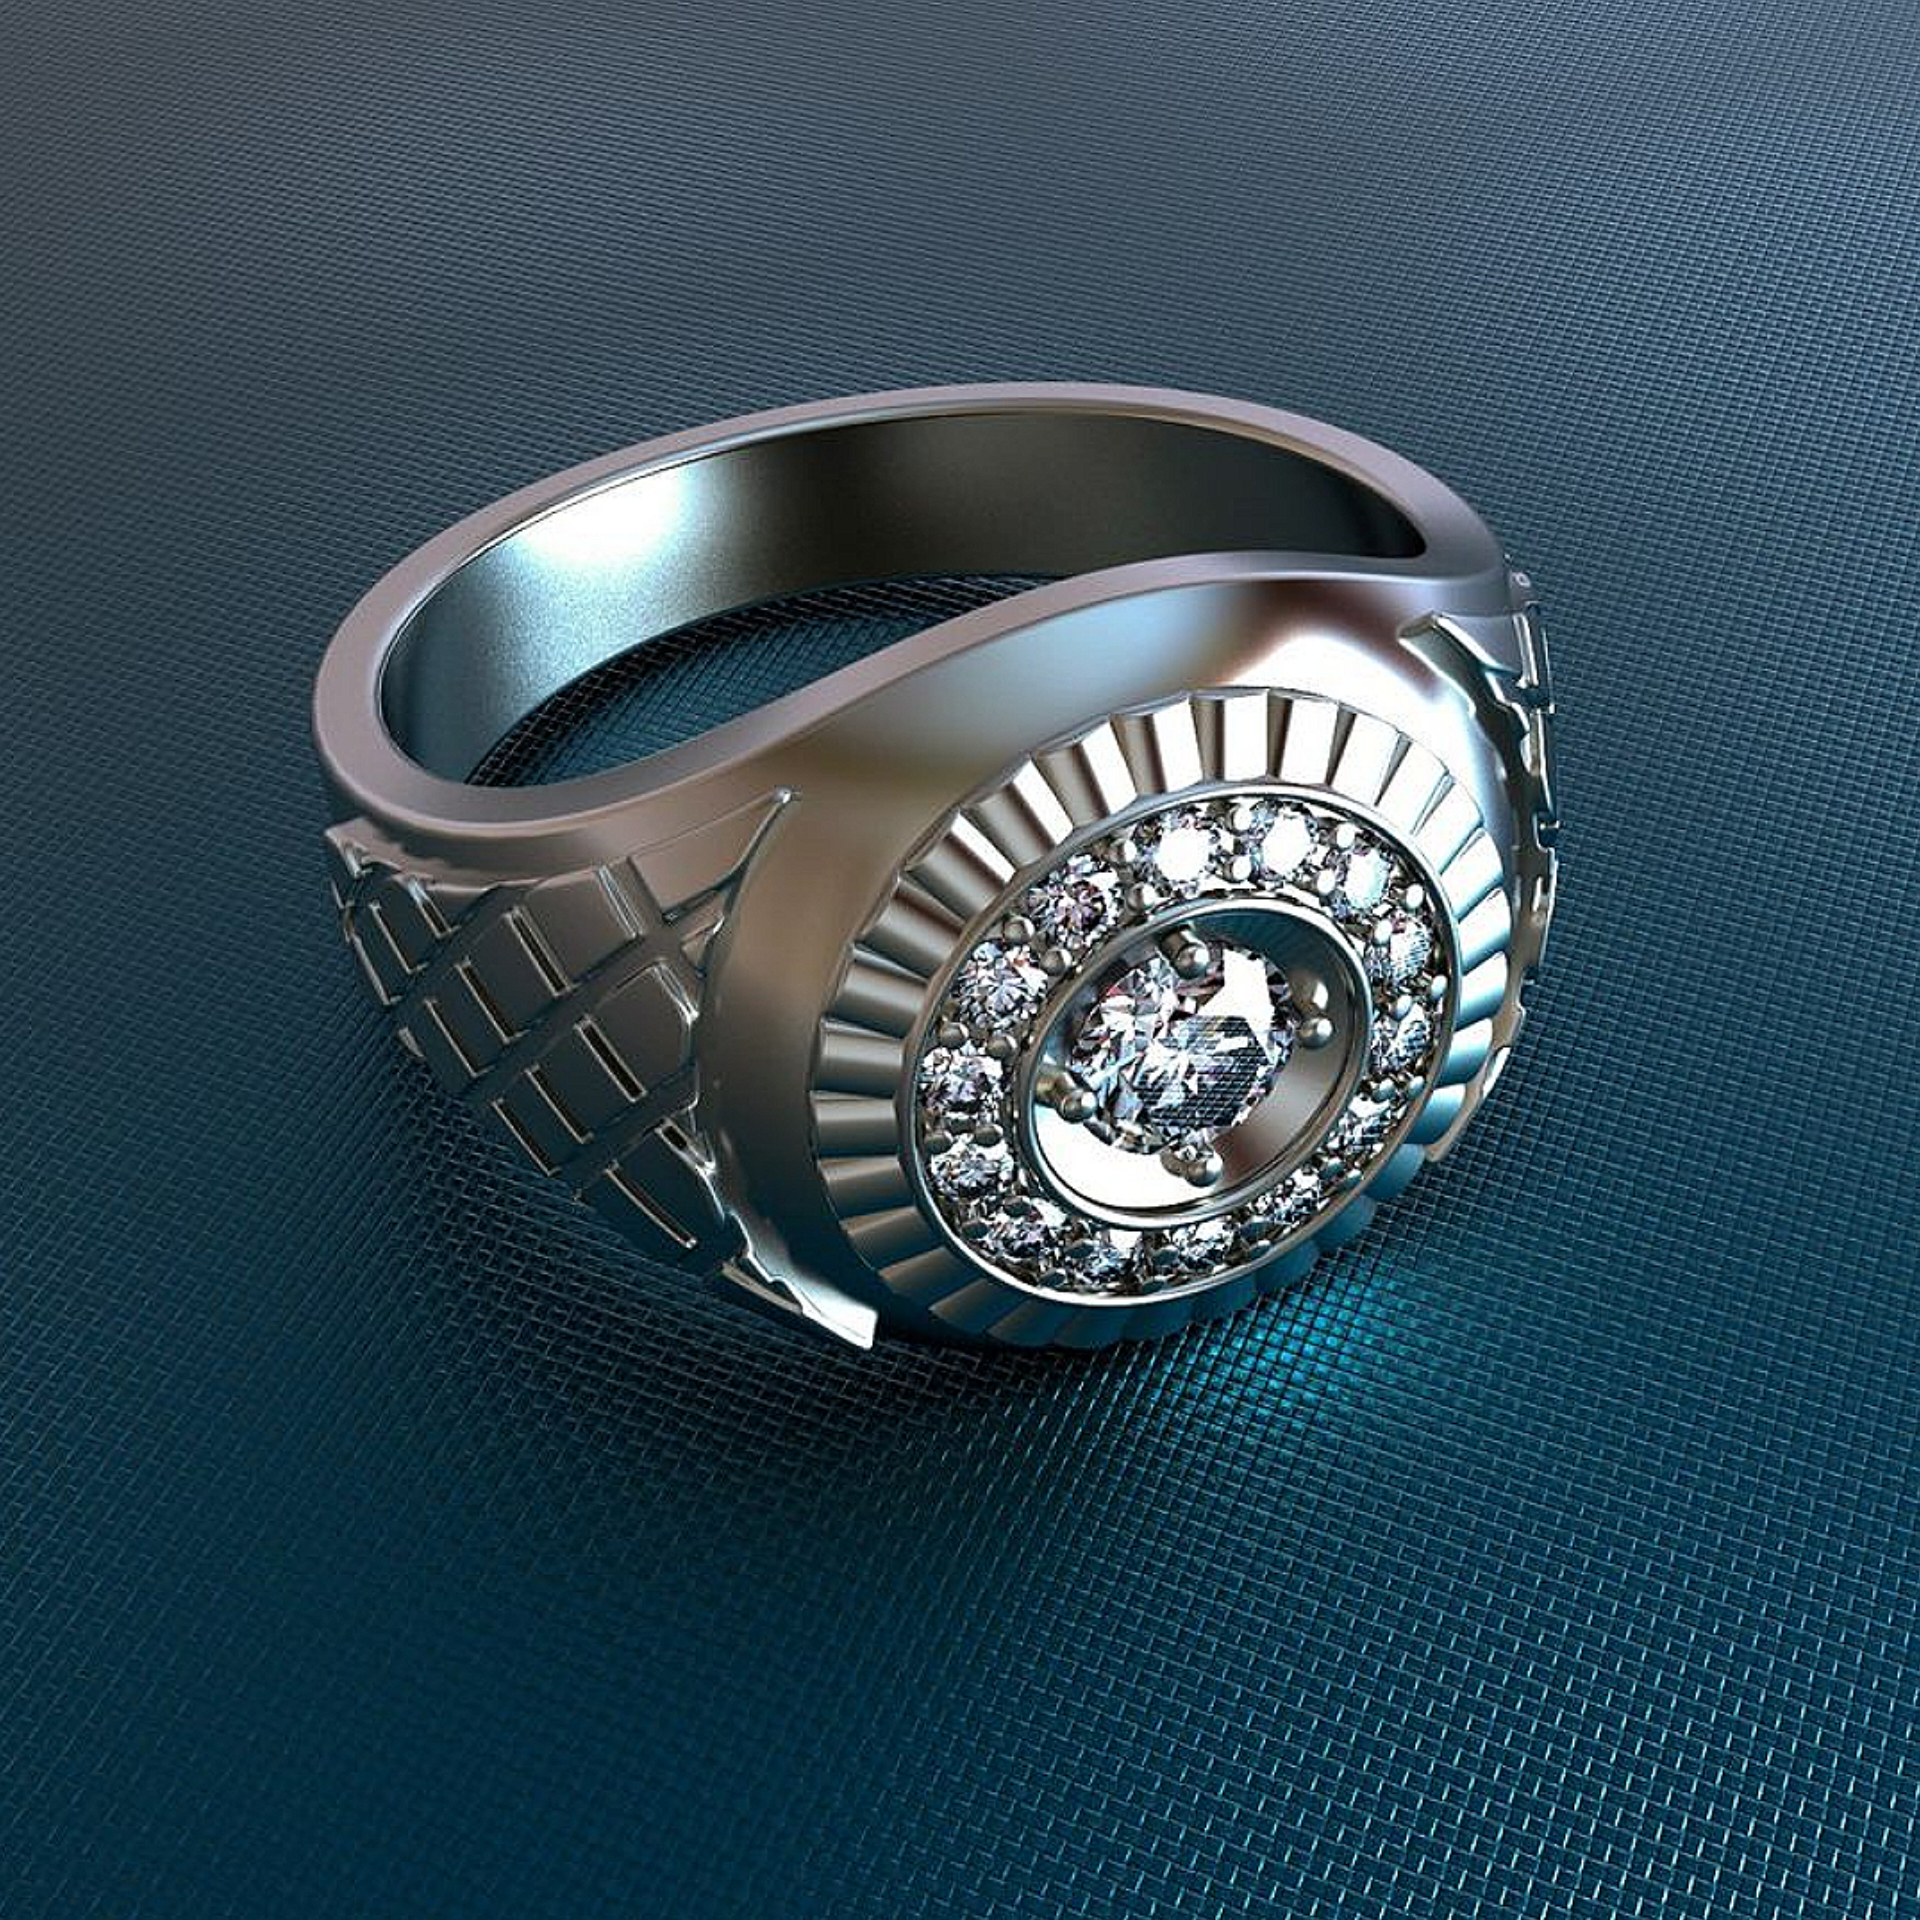 Перстни мужские серебро с камнями. Кольцо а17 asr печатка. Перстень мужской. Серебряное мужское кольцо. Серебряный перстень мужской.